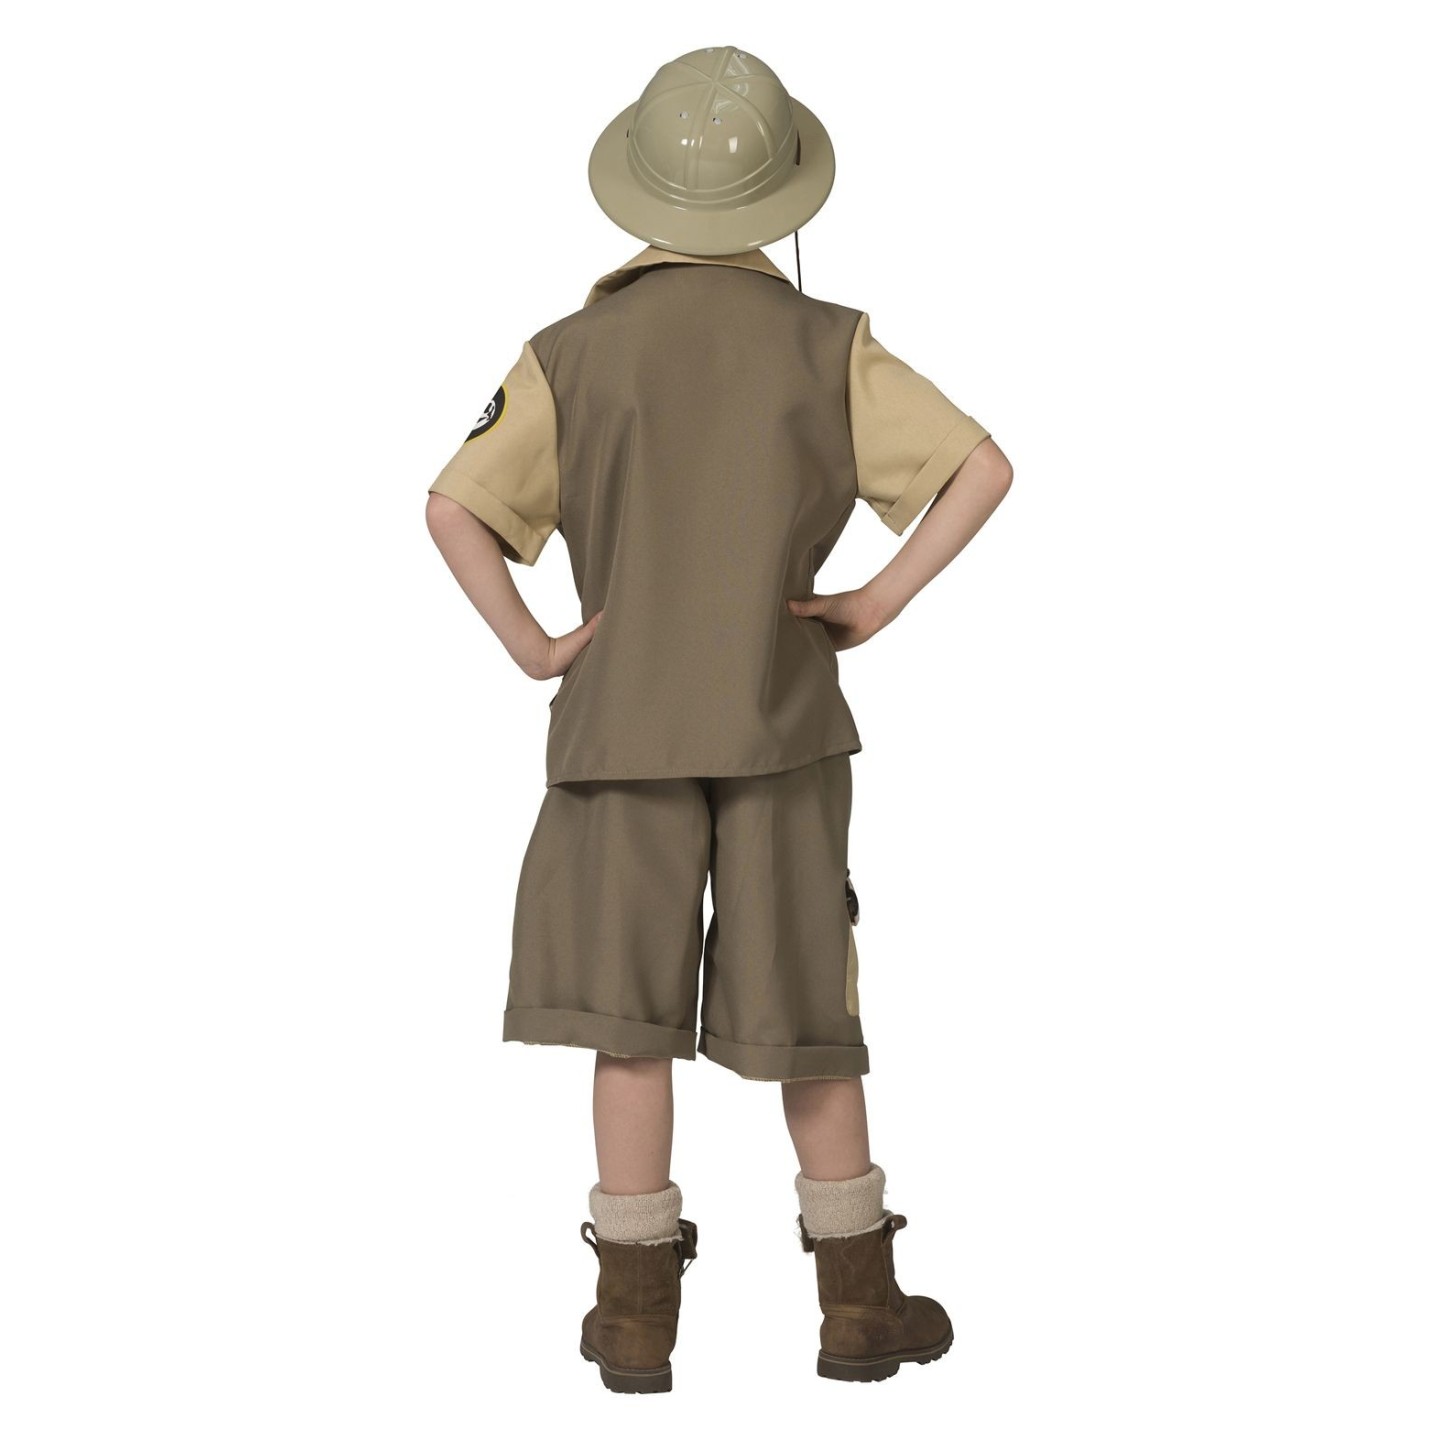 kom tot rust minimum Somber Safari kostuum kind - Jungle outfit | Jokershop.be - Verkleedkleding